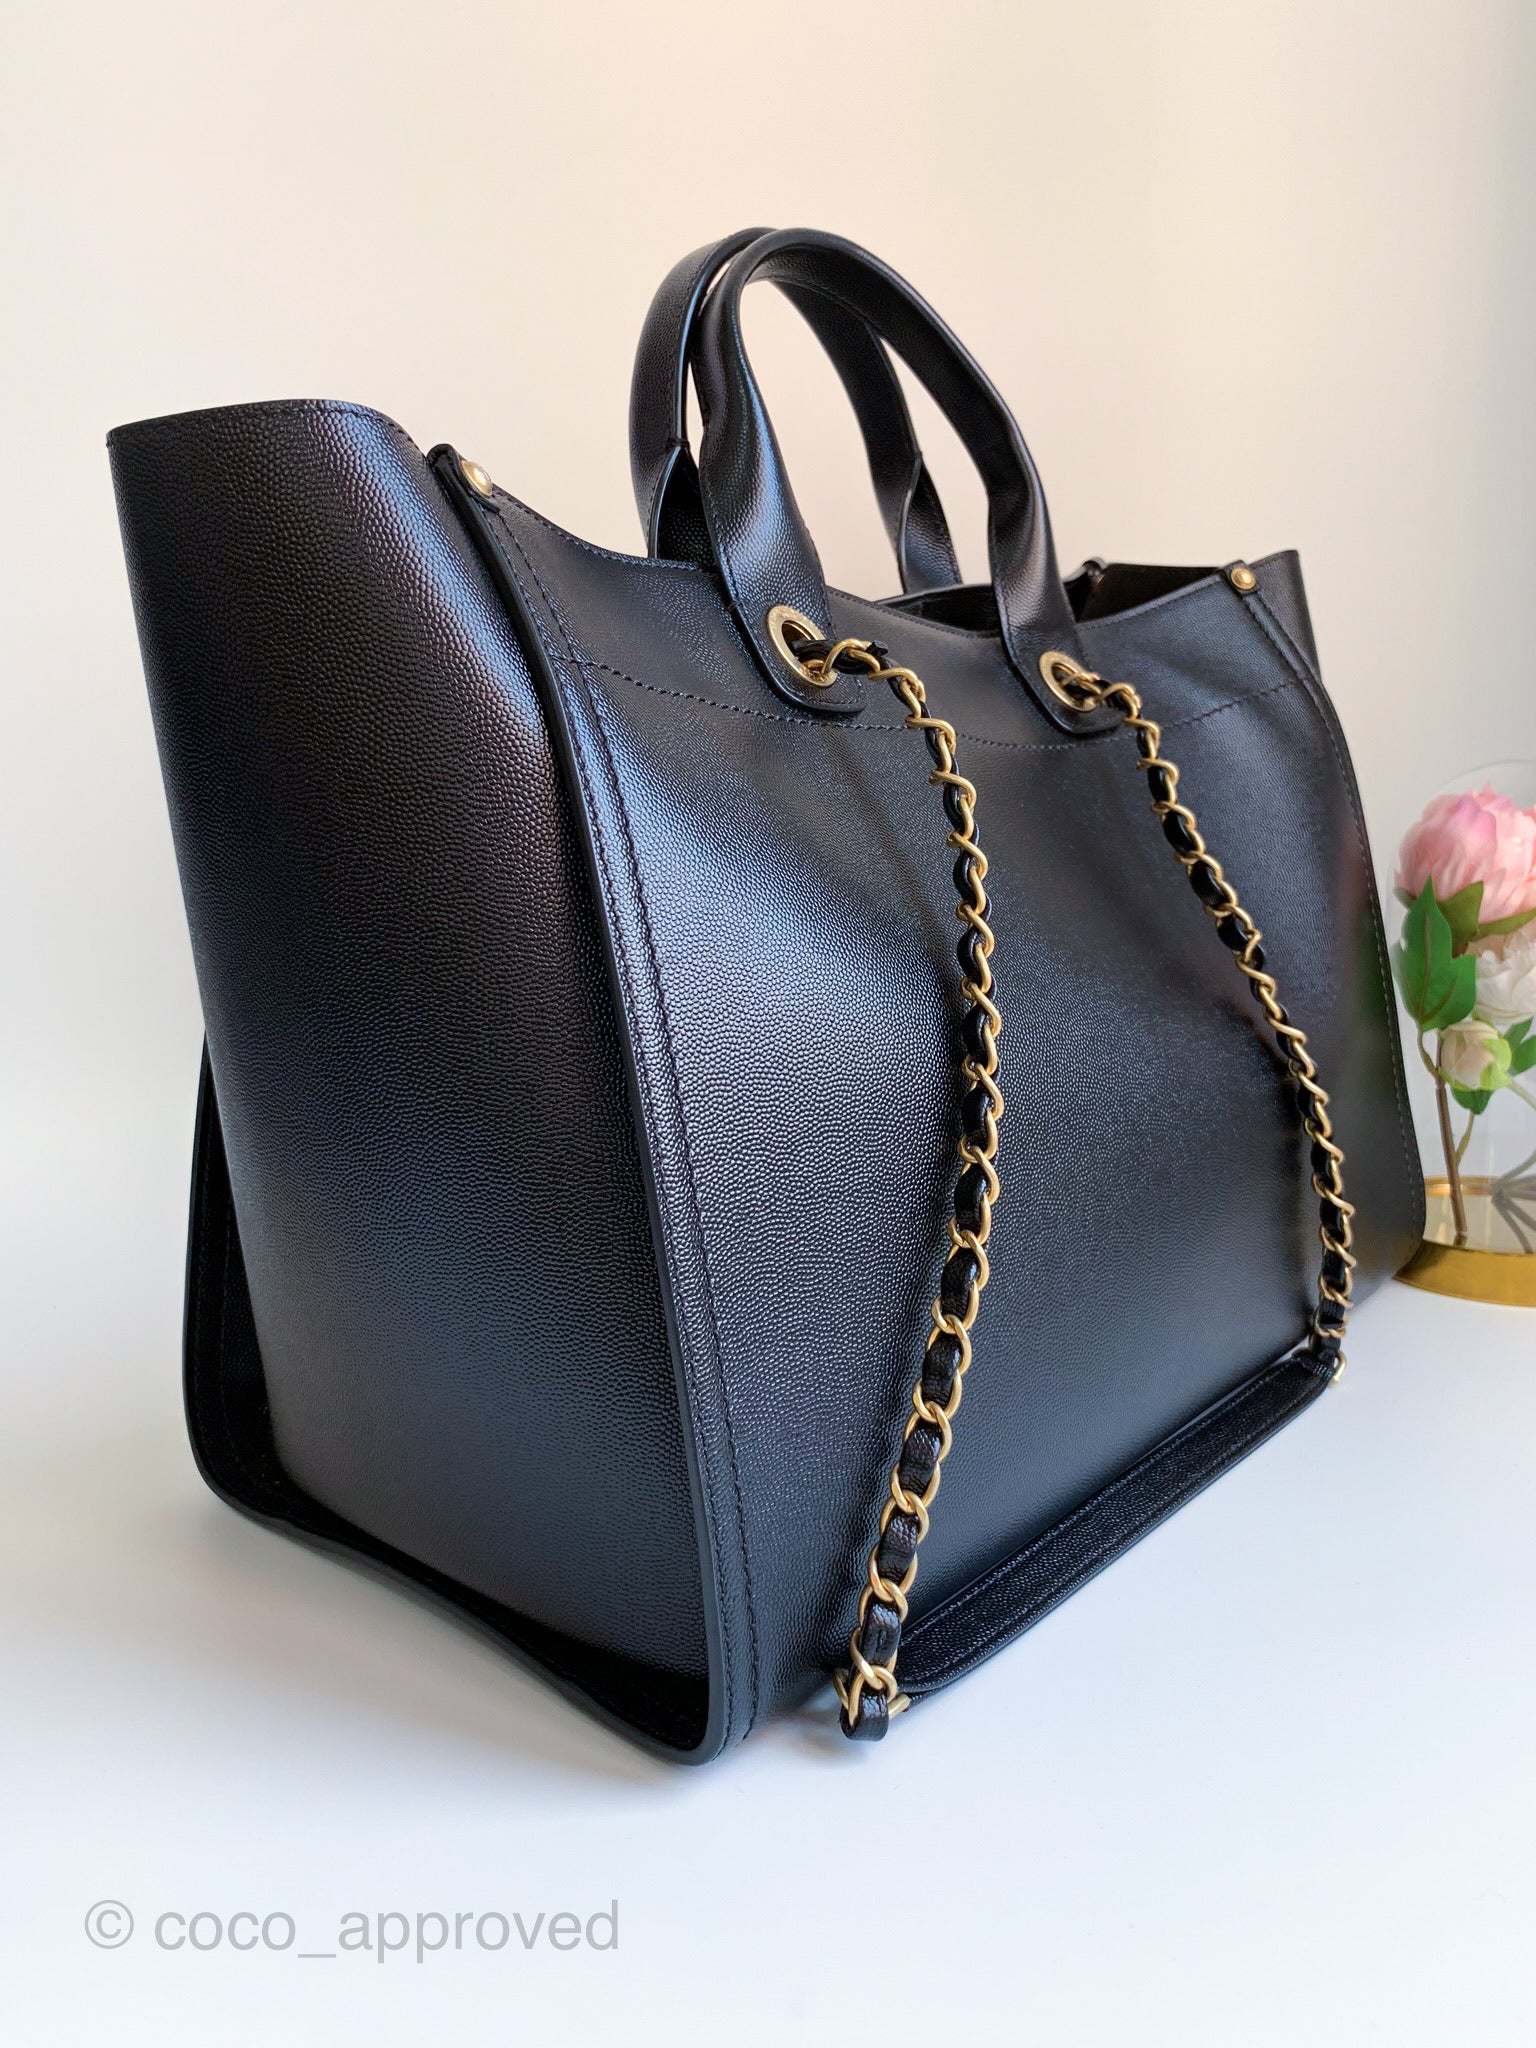 Chanel Medium Deauville Tote - Black Totes, Handbags - CHA951951